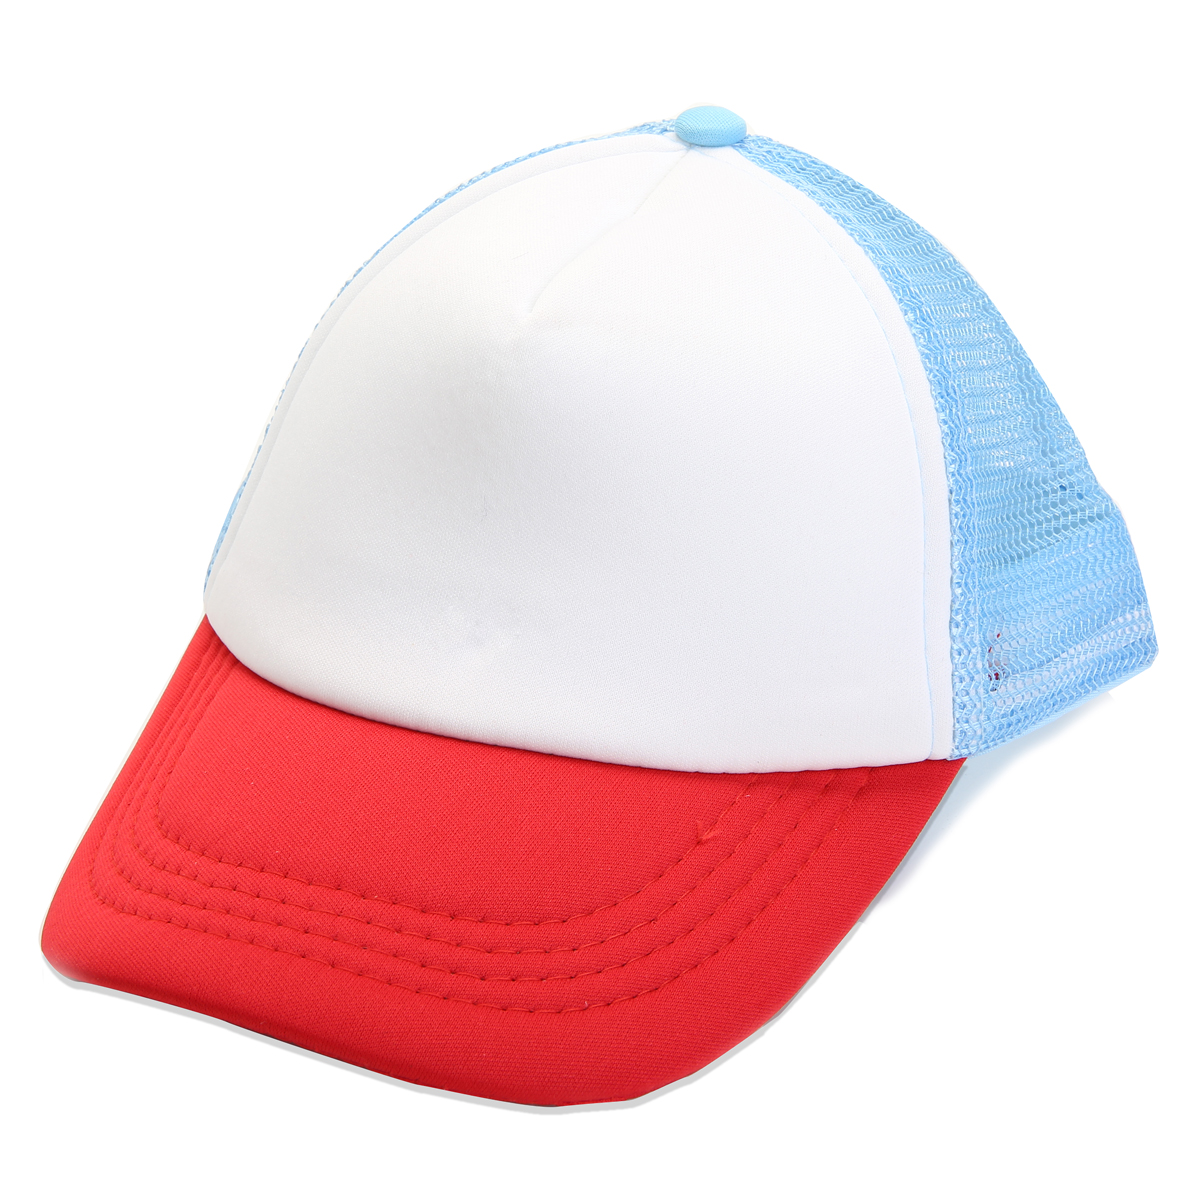 Adult-Kids-Children-Red-White-Blue-Adjustable-Baseball-Cap-Outdoor-Activity-Sunscreen-Sun-Hat-1470326